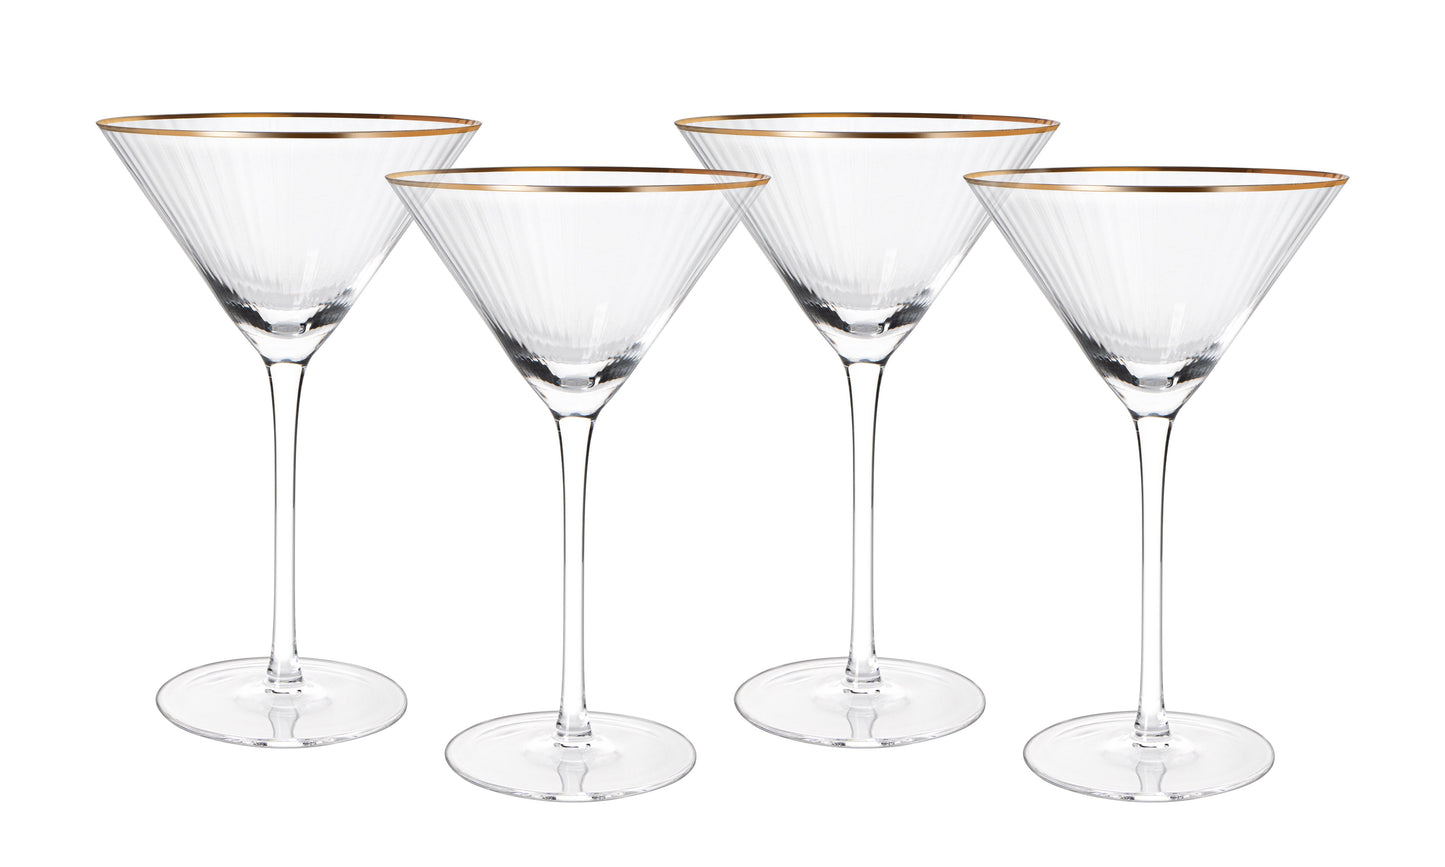 The Wine Savant - Gold Rim Vintage Martini Glasses - Set of 4 - 10oz